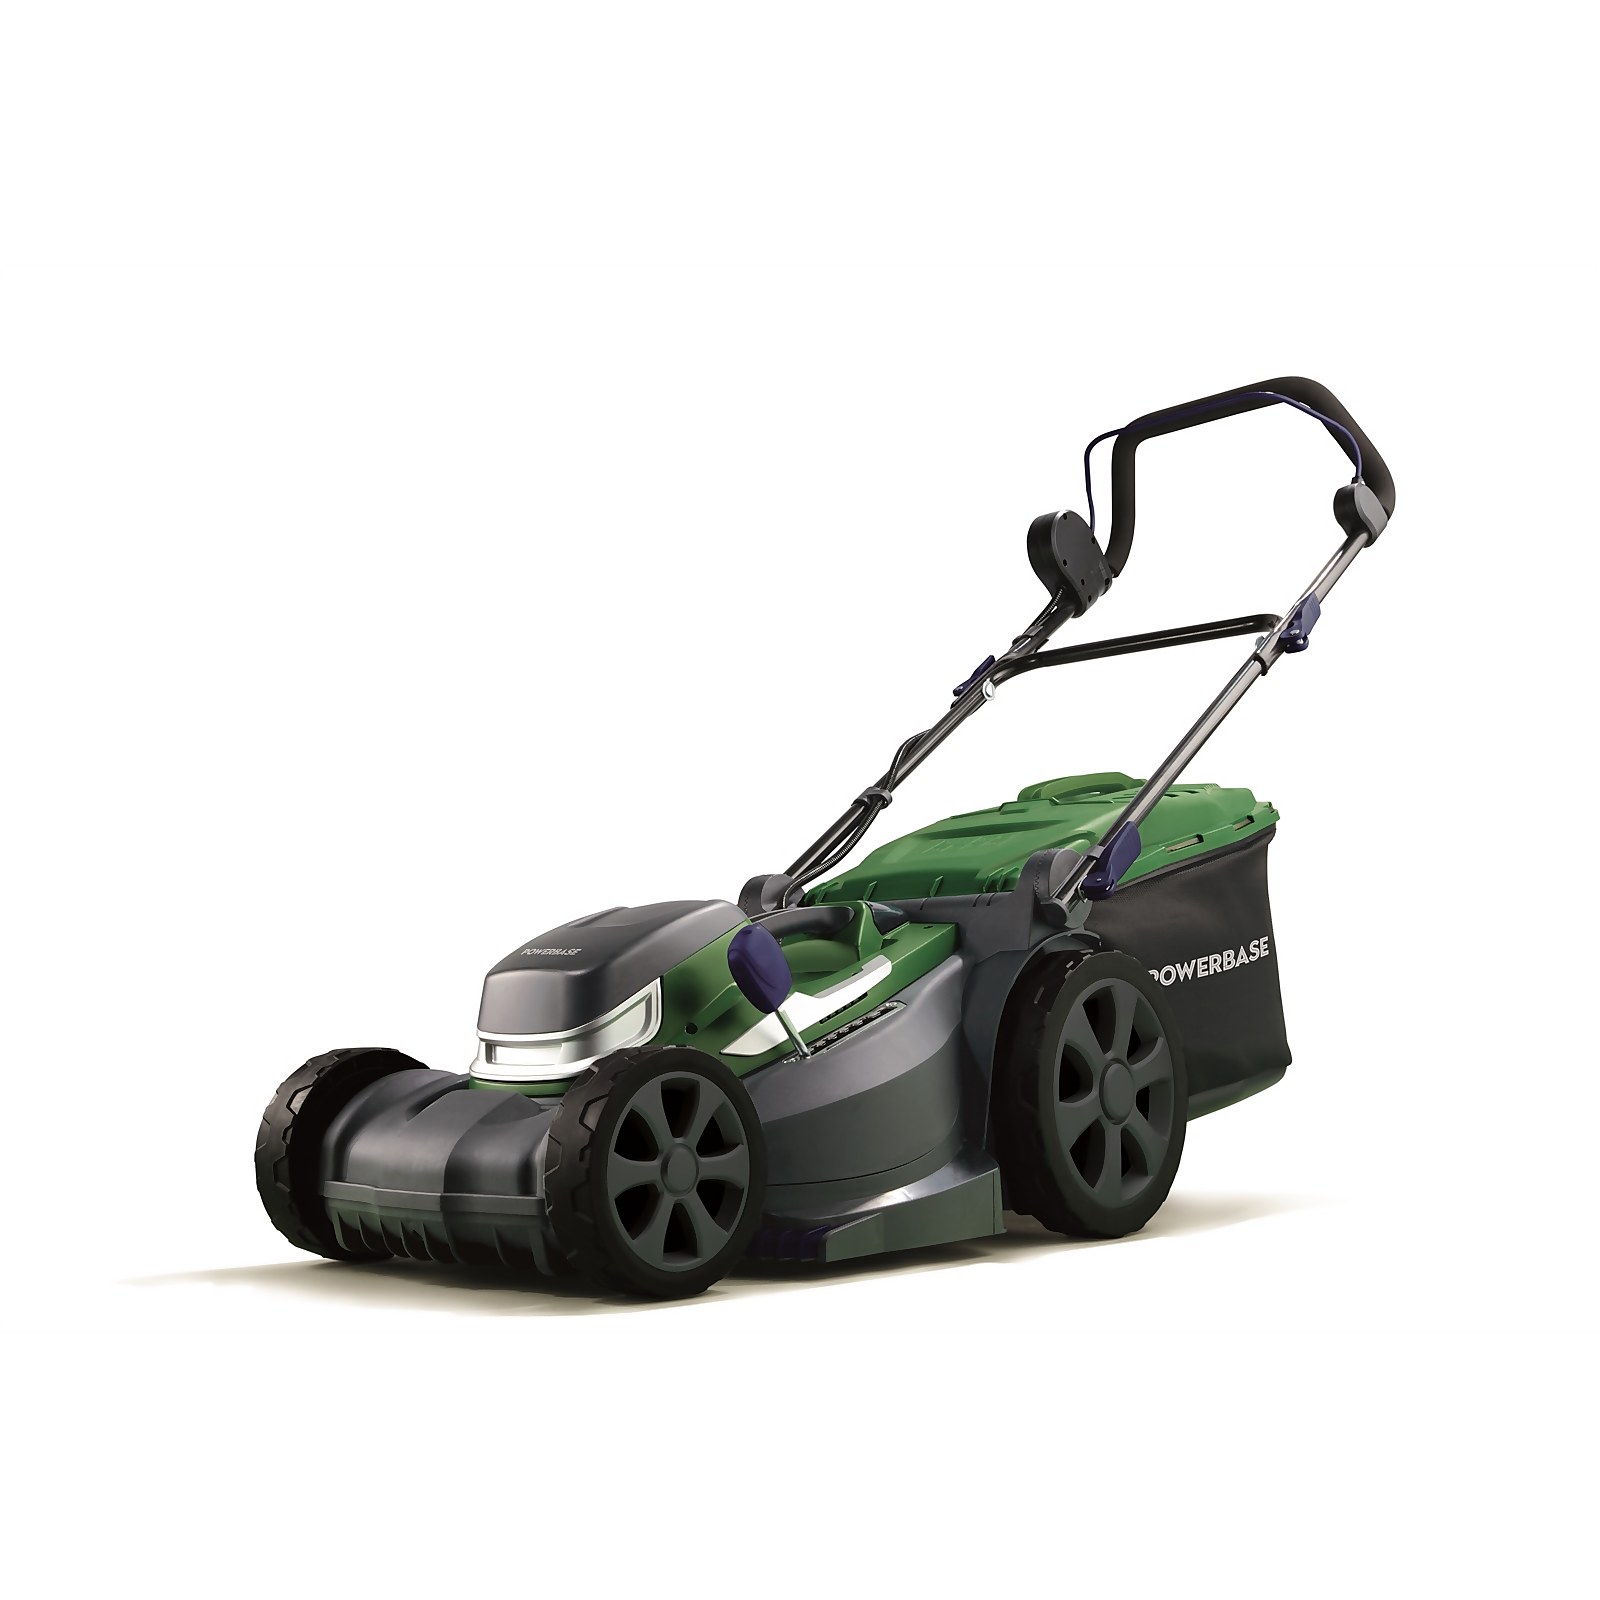 Powerbase 40V 40cm Cordless Lawn Mower